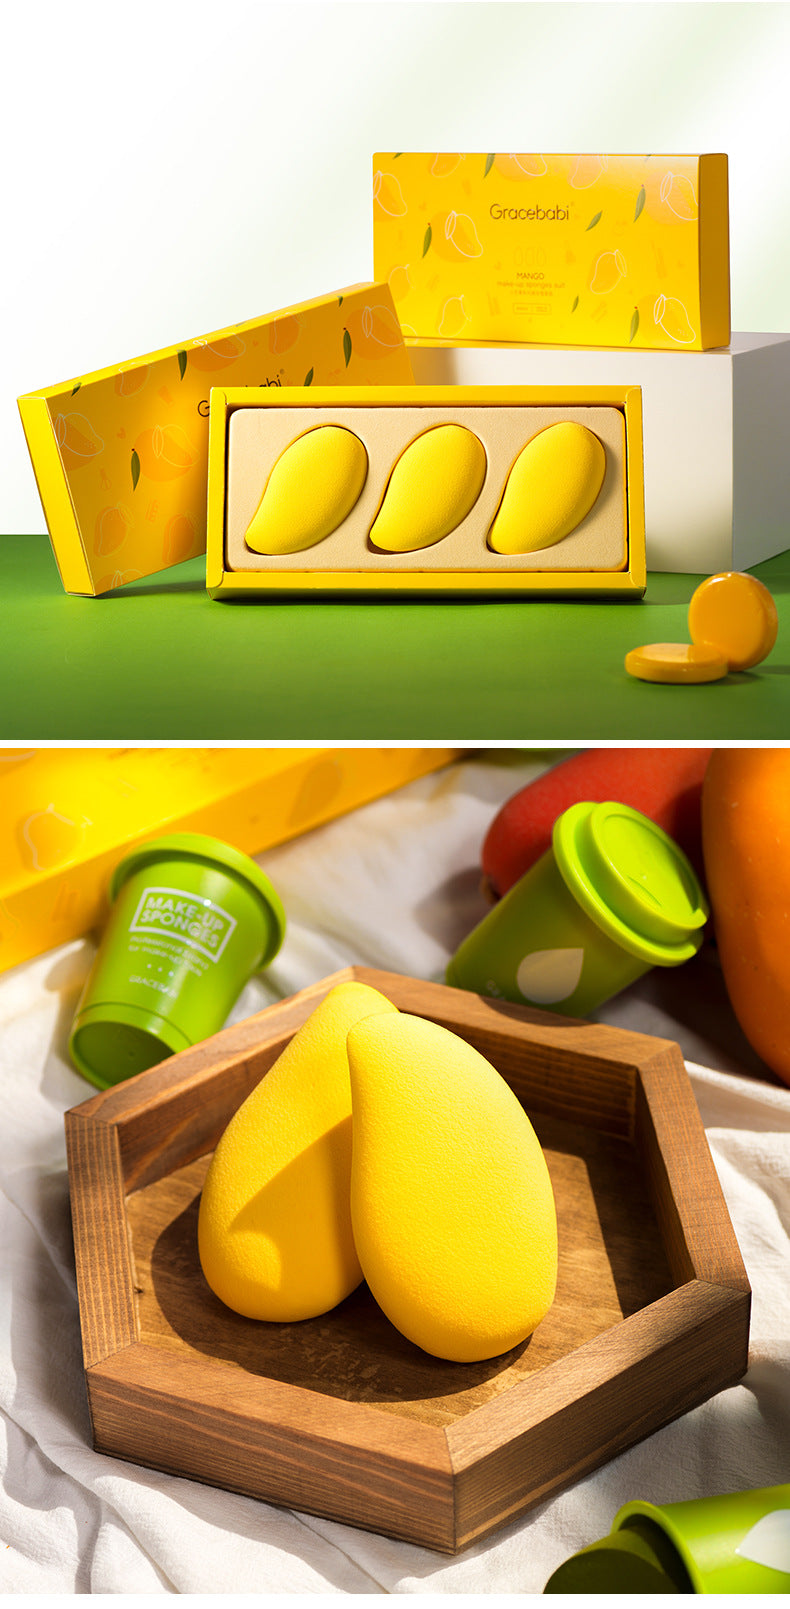 Gracebabi Little Mango Beauty Blender Egg Makeup Sponges Set 3pcs 瑰宝秘语小芒果美妆蛋套装